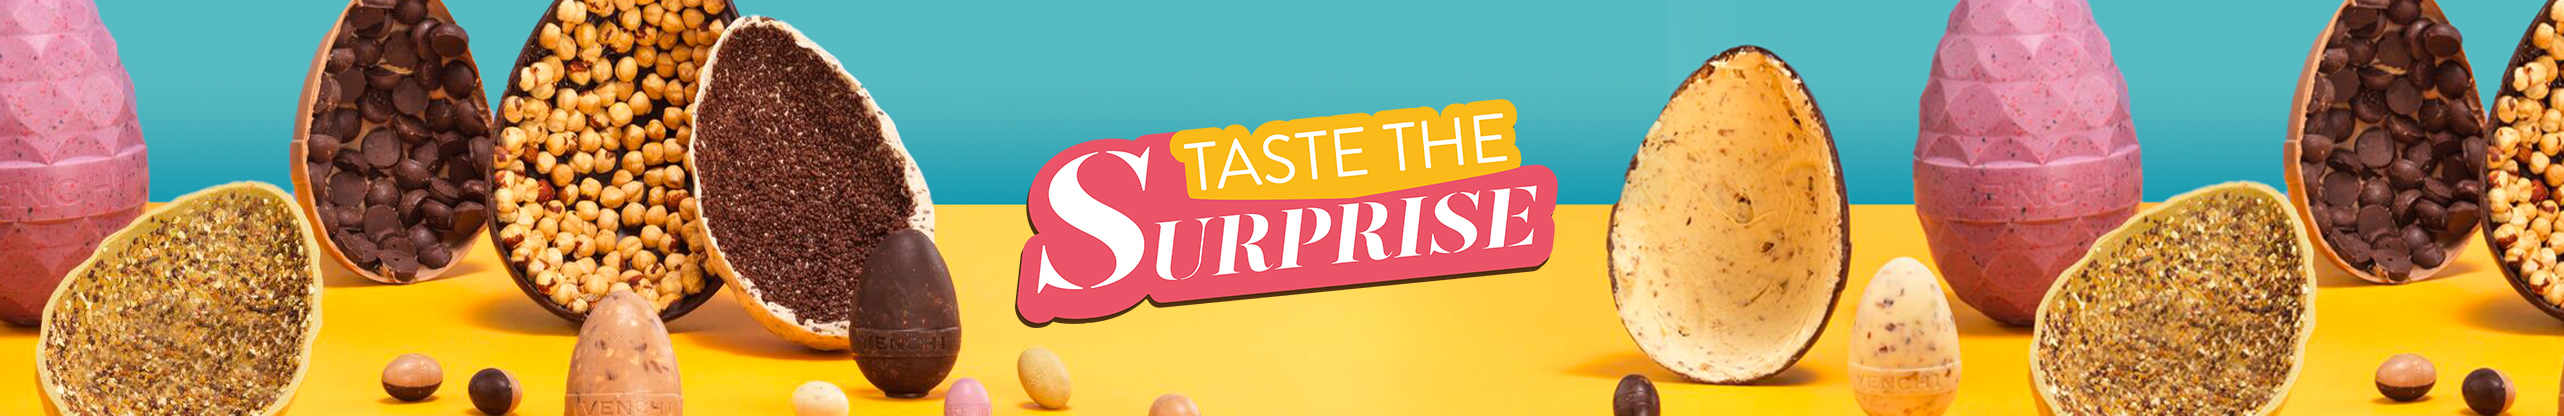 Taste the Surprise